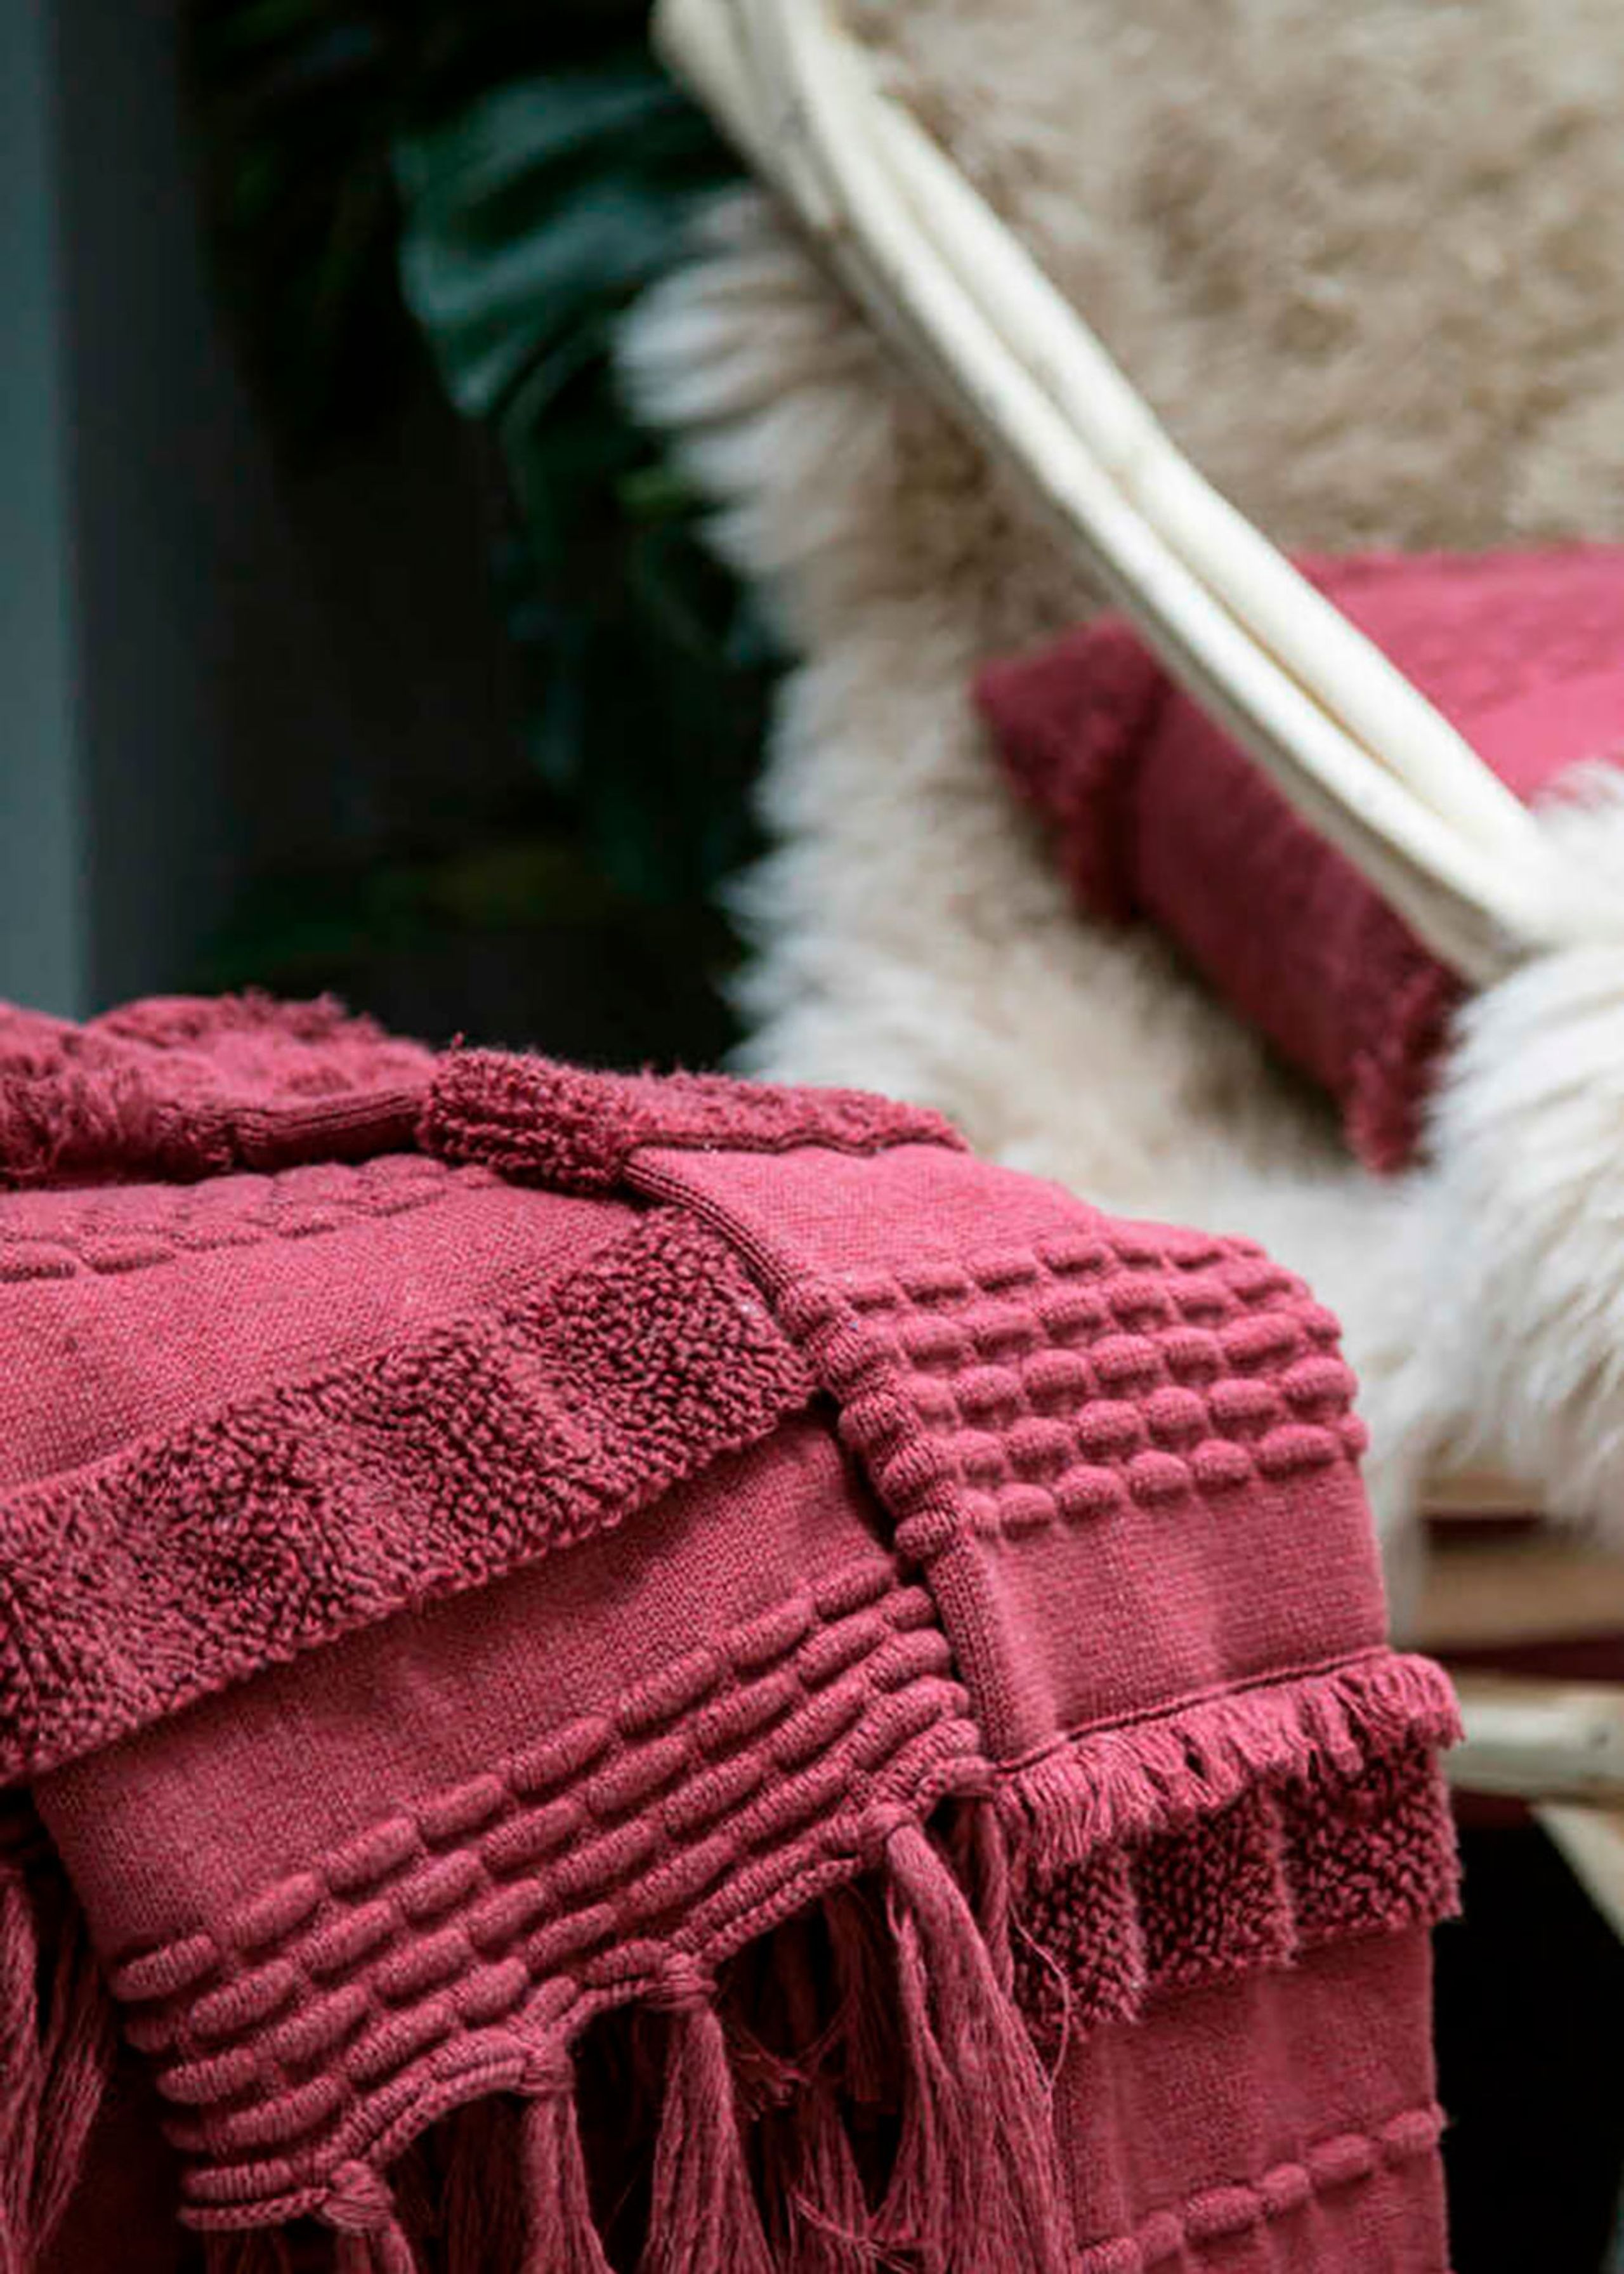 Lorena Canals - Decke - Knitted Blanket Air - Savannah Red